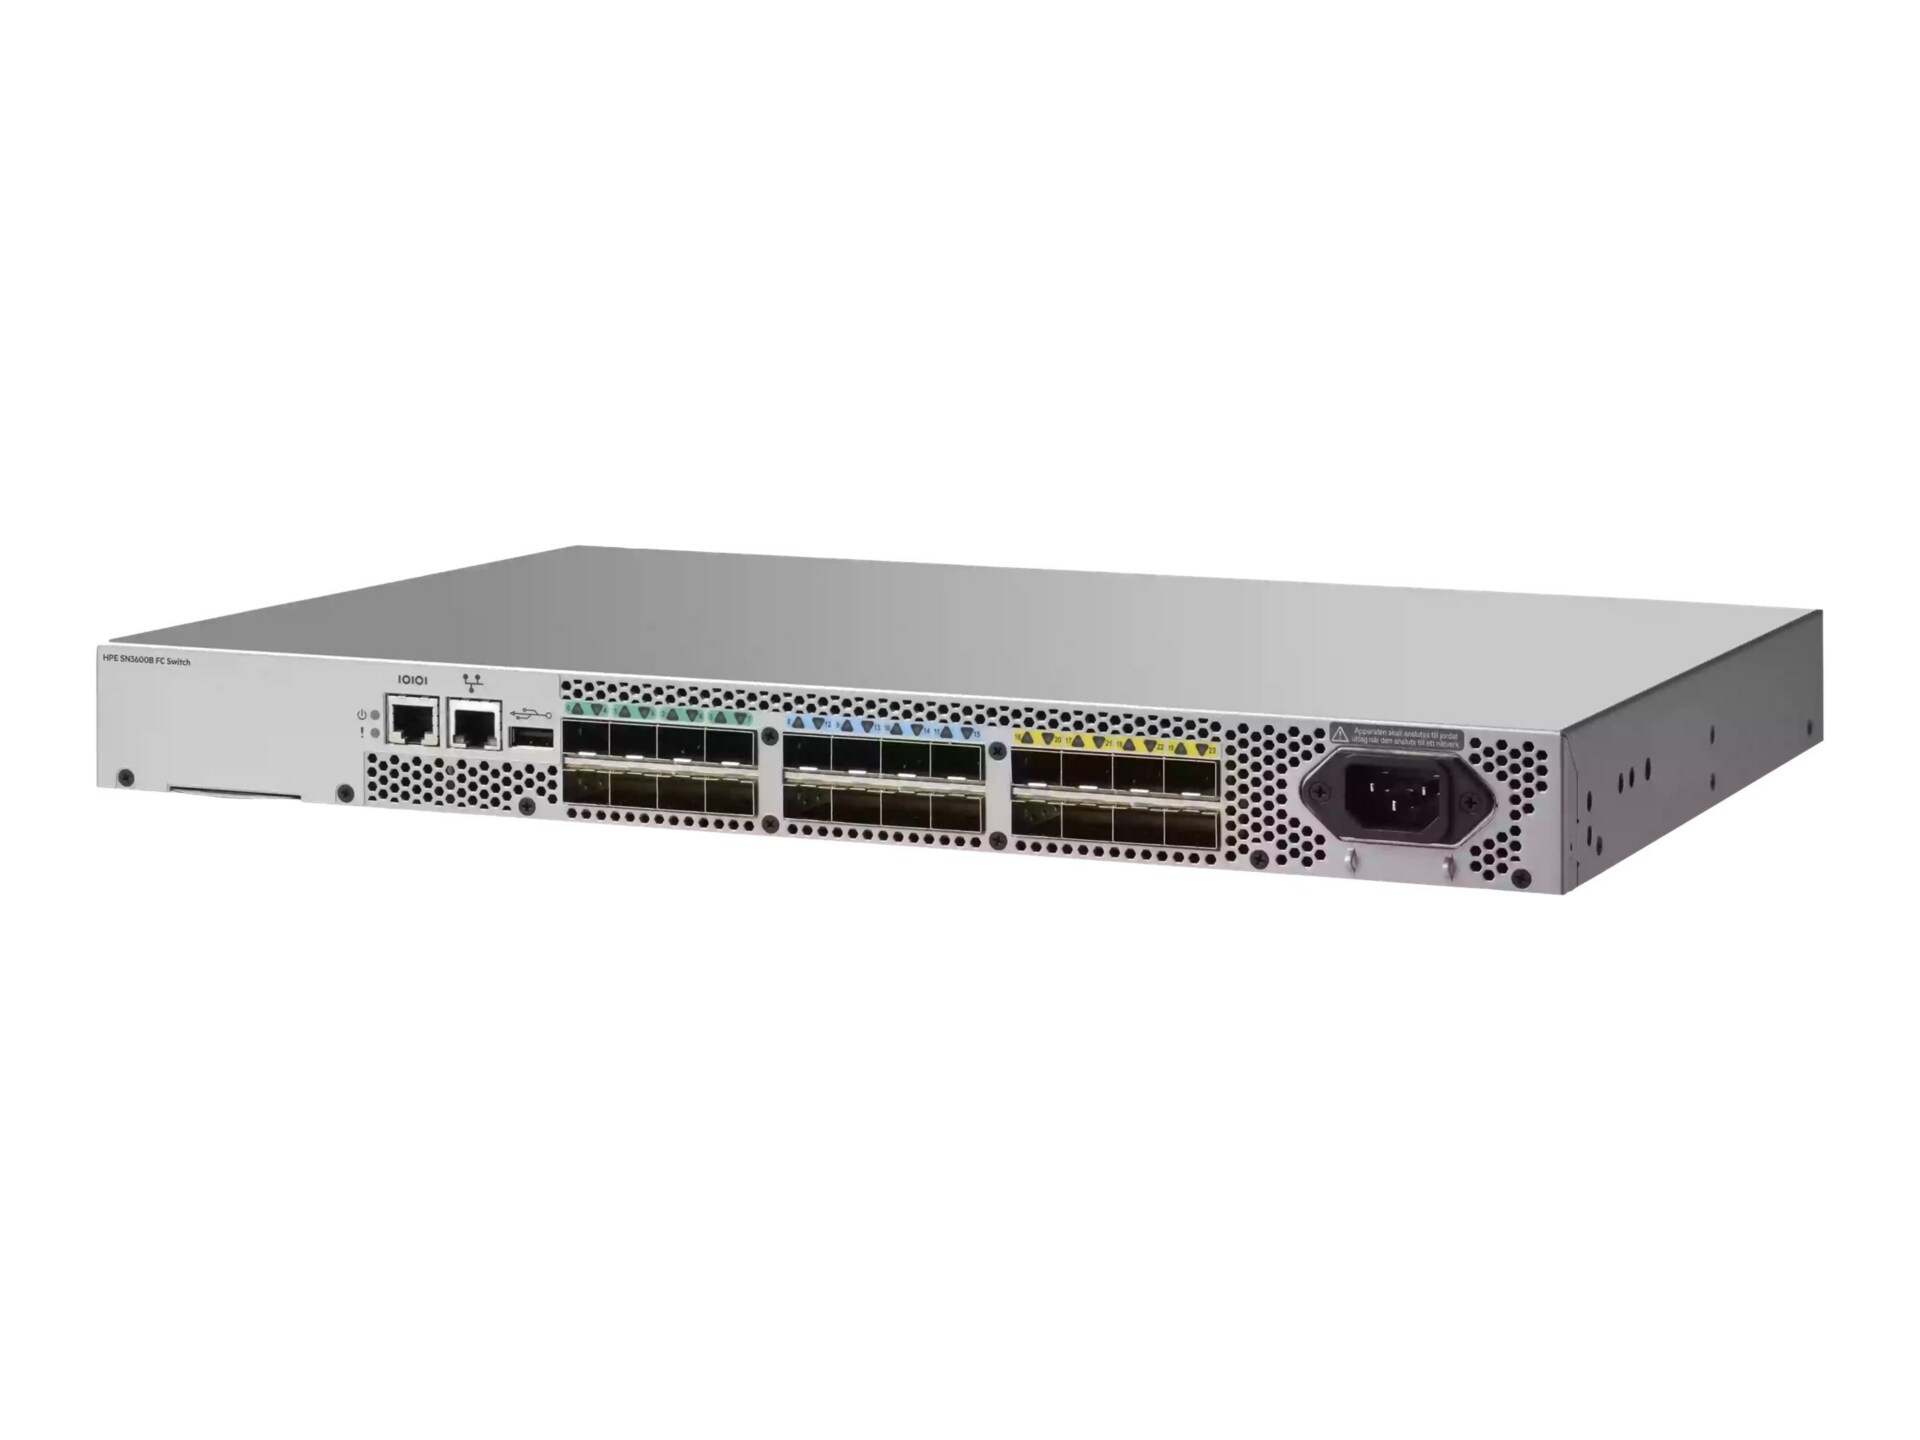 HPE StoreFabric SN3600B - switch - 24 ports - managed - rack-mountable - wi